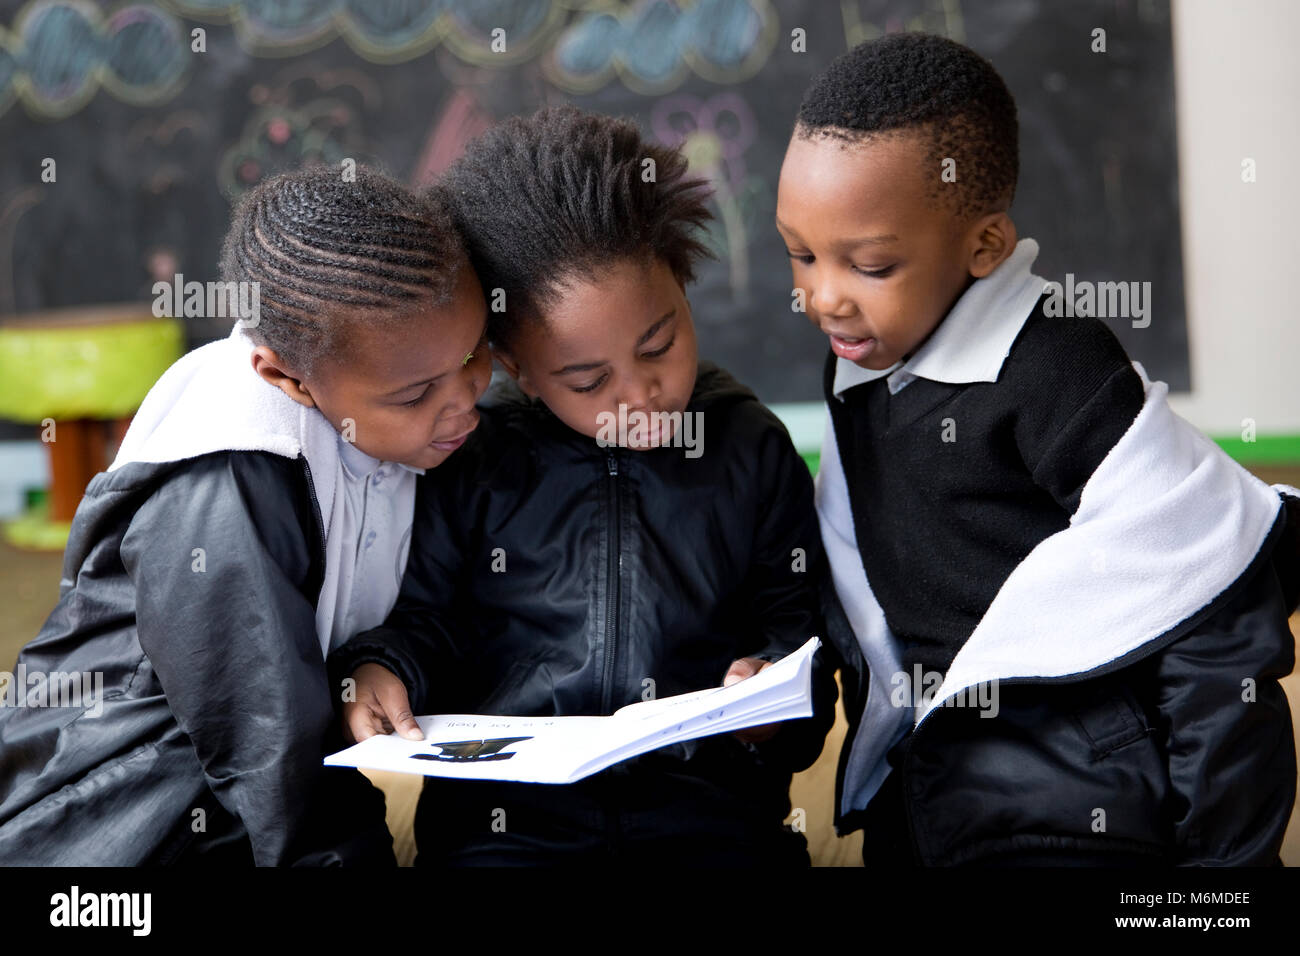 School kids reading in the classroom Stock Photo